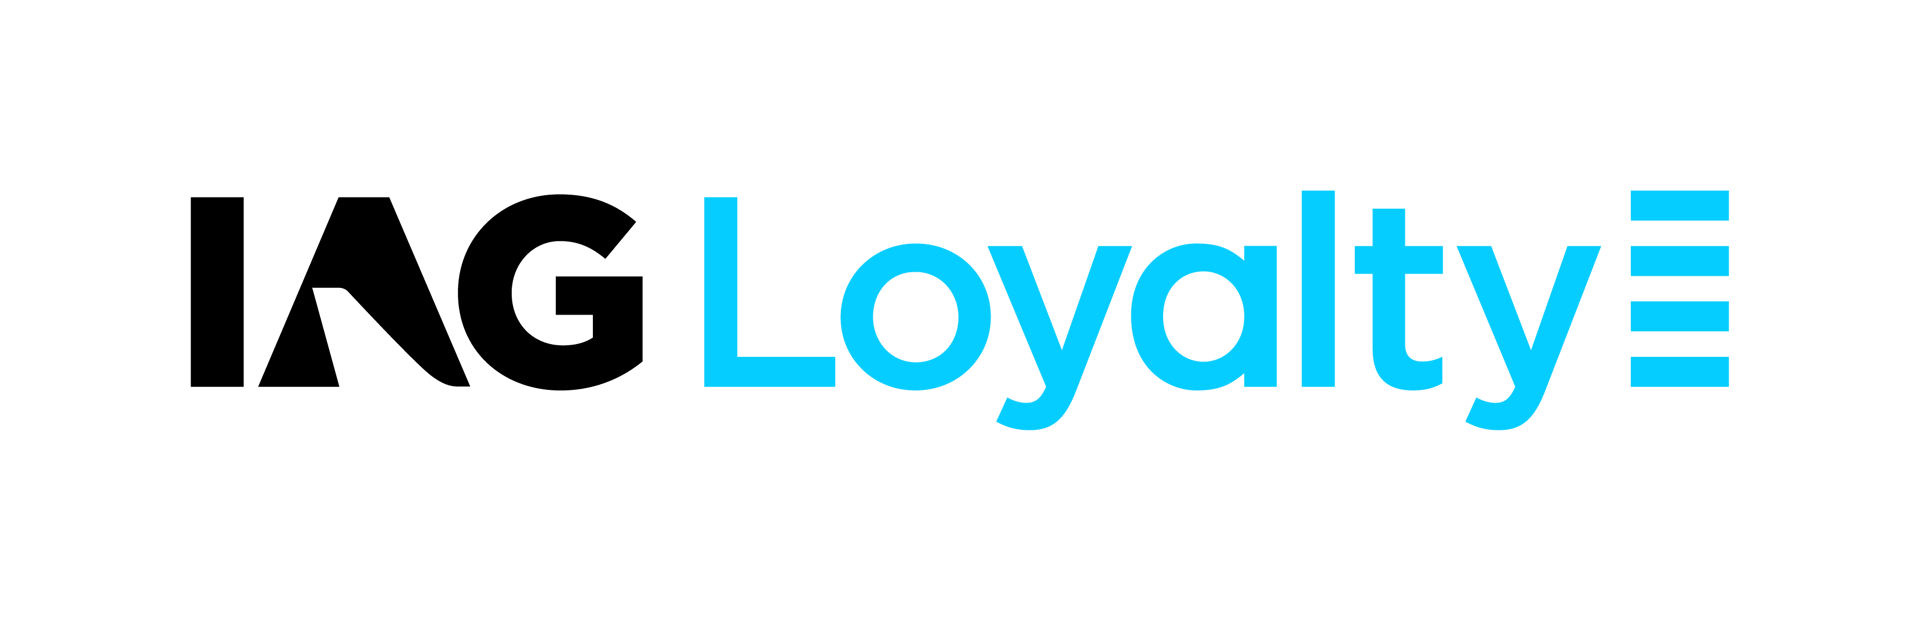 loyalty-logo-black-and-blue